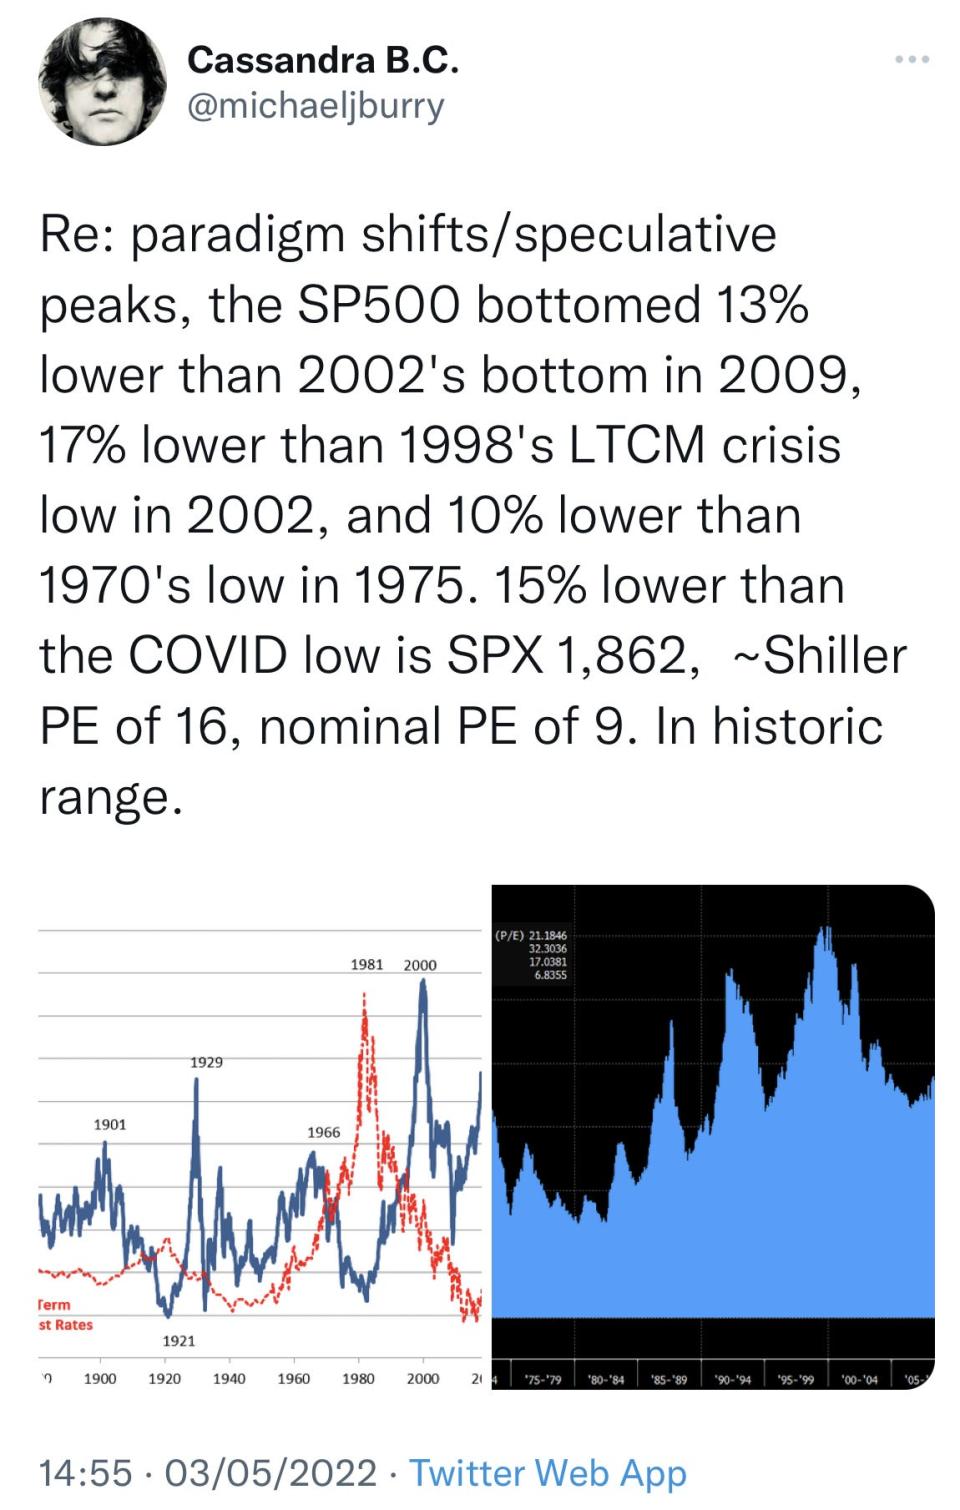 Burry tweet about speculative peaks